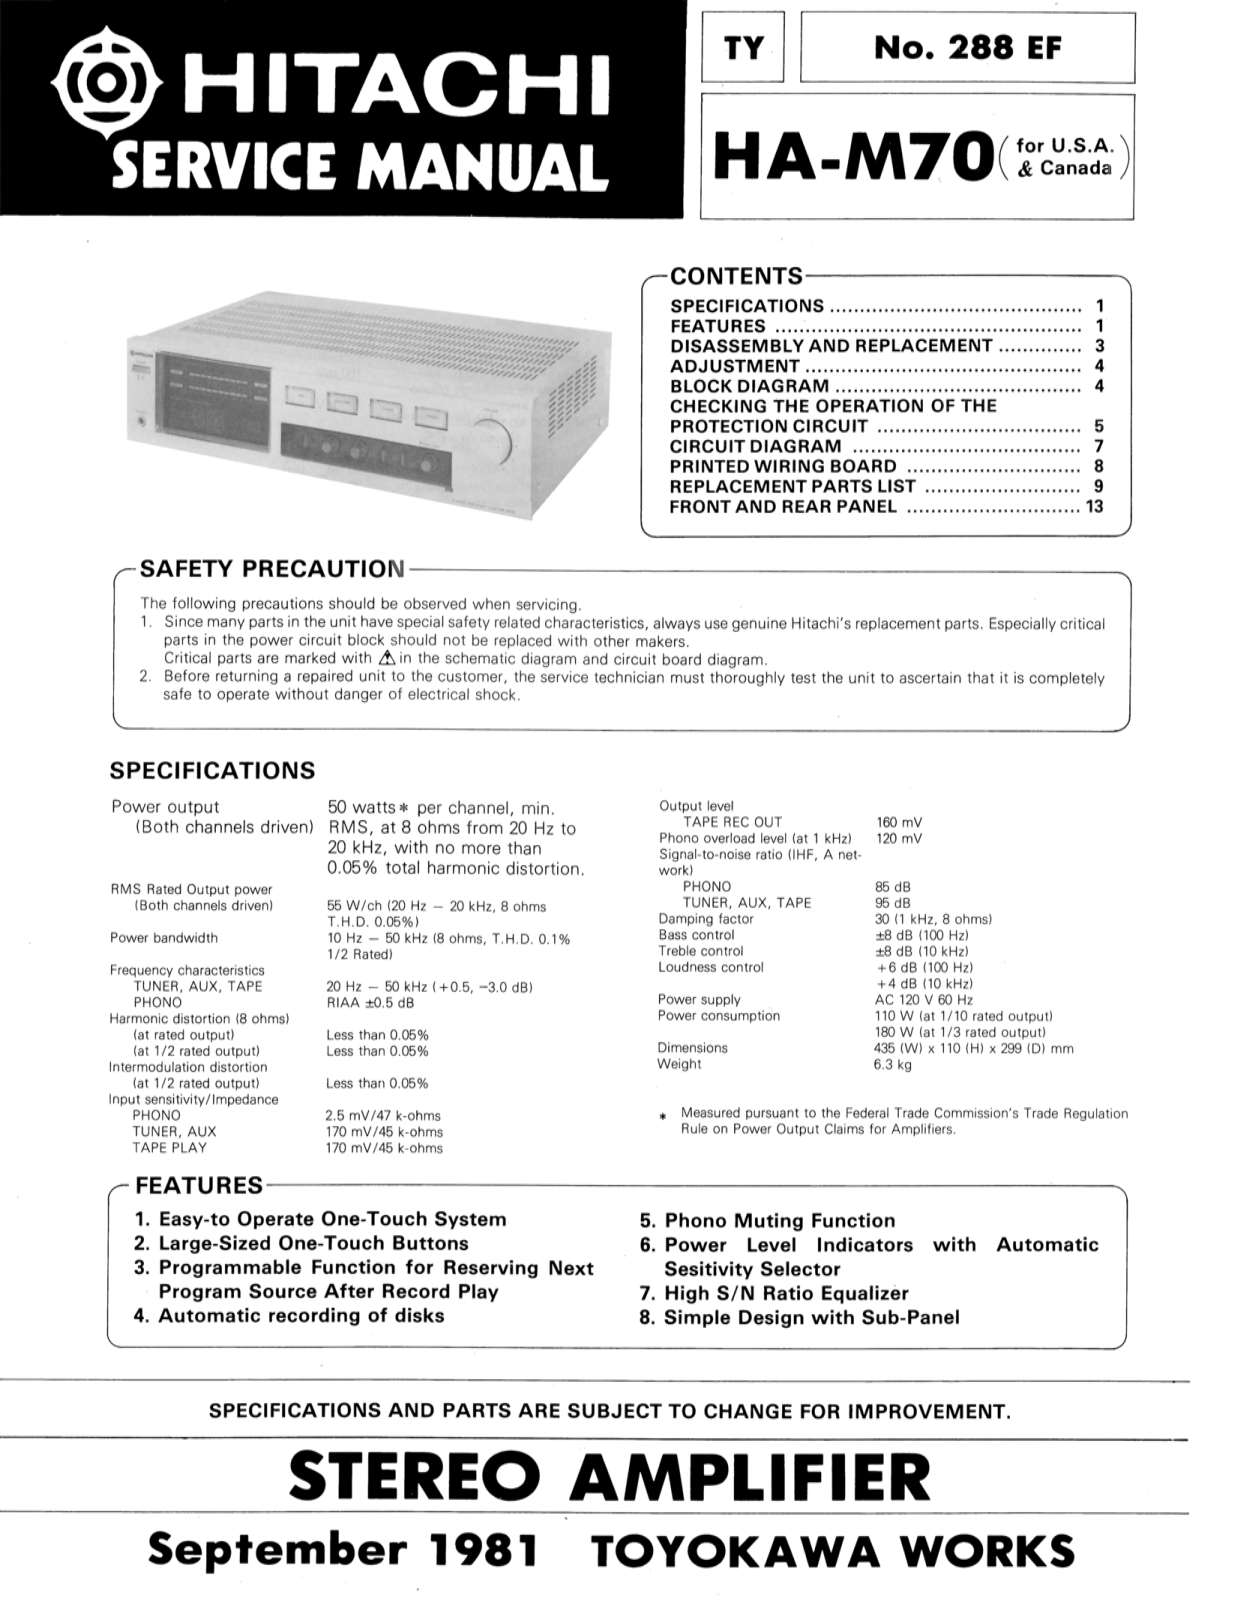 Hitachi HA-M70 Service Manual